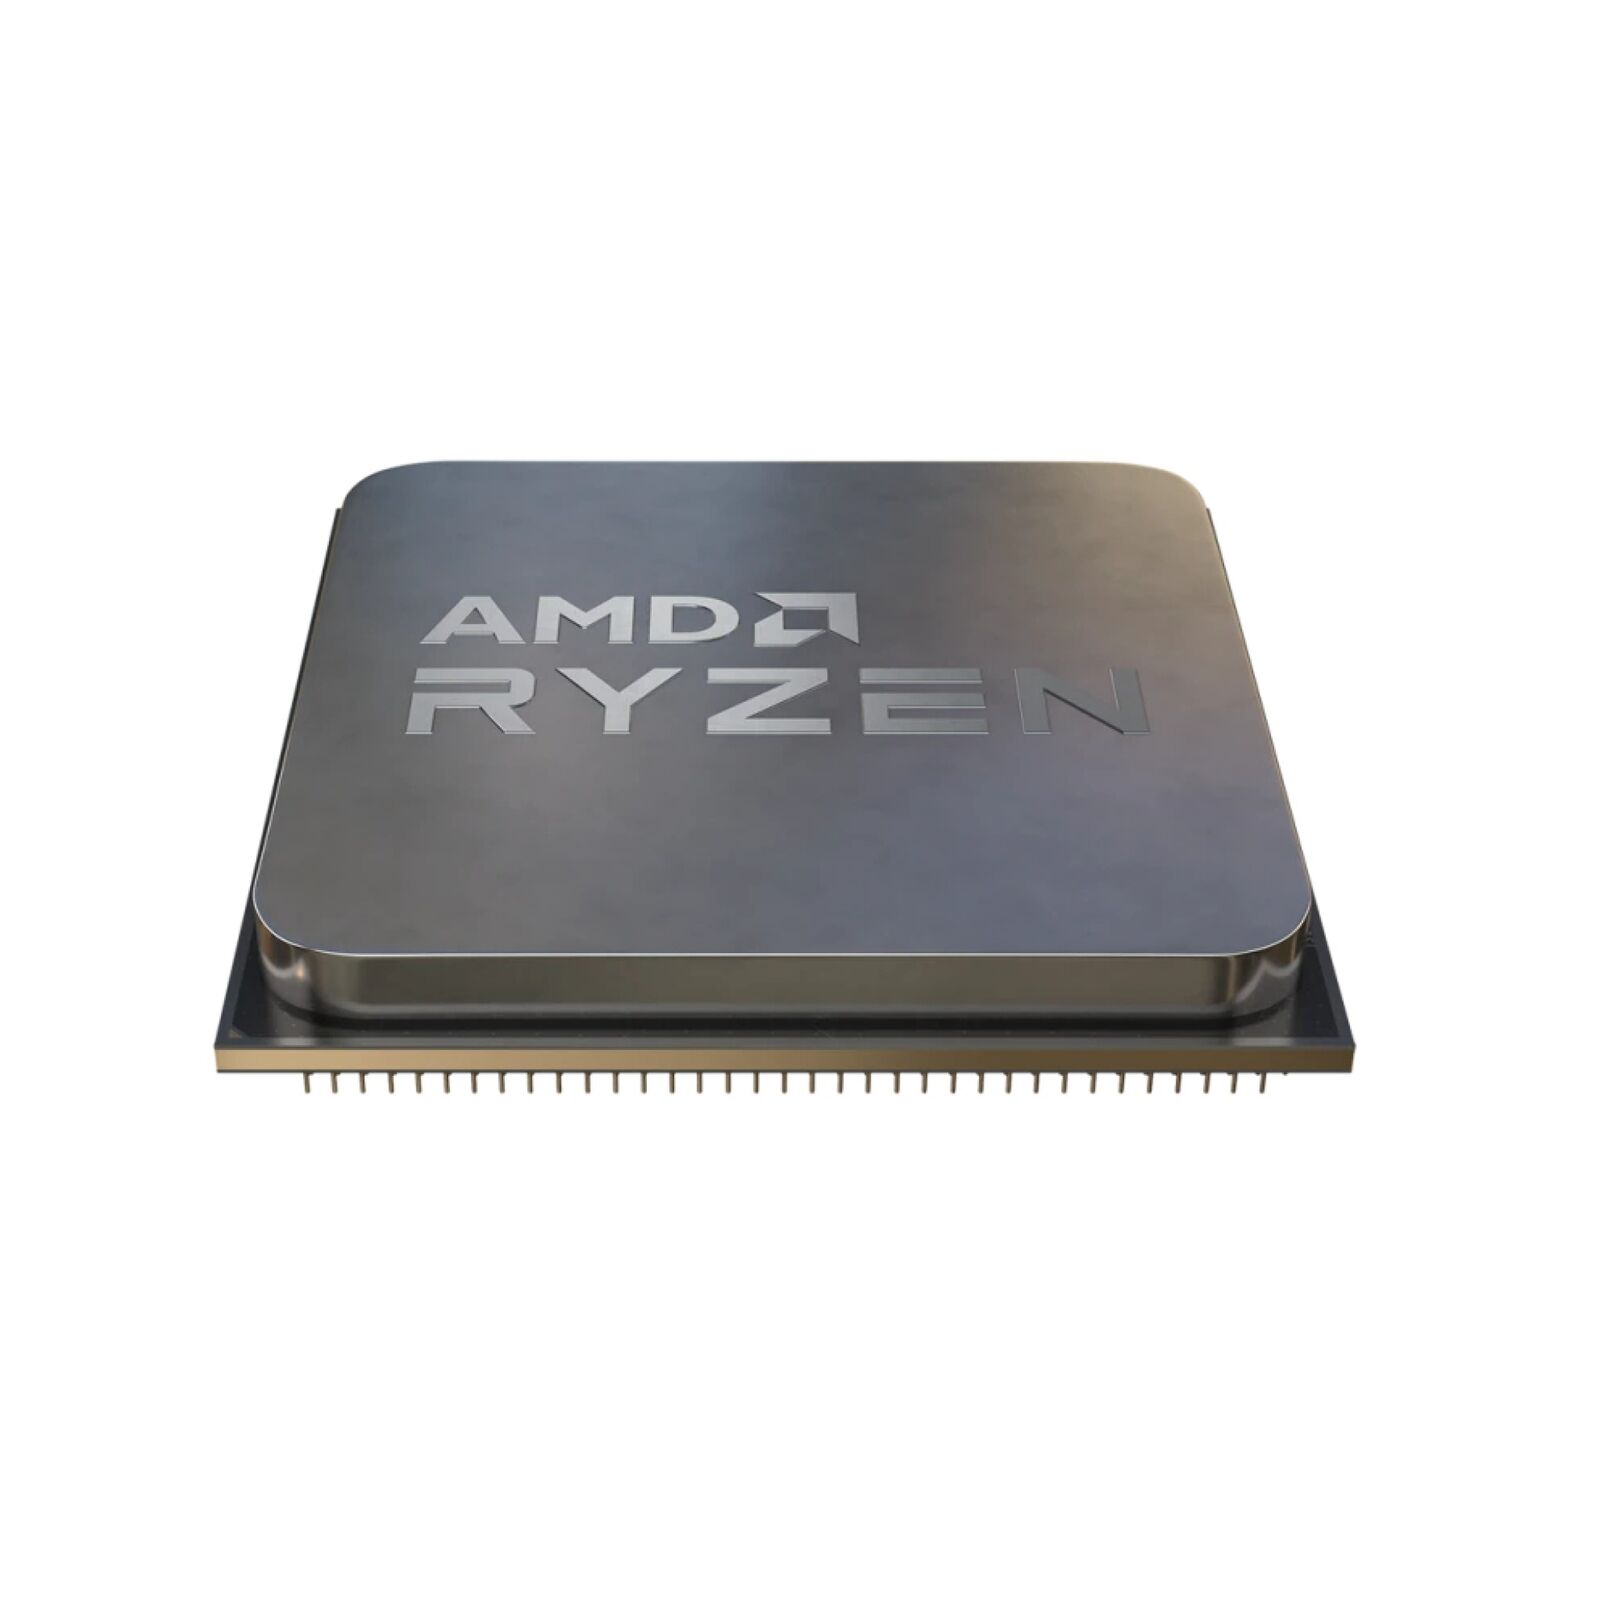 Buy AMD Ryzen 5 5600 from £112.00 (Today) – Best Deals on